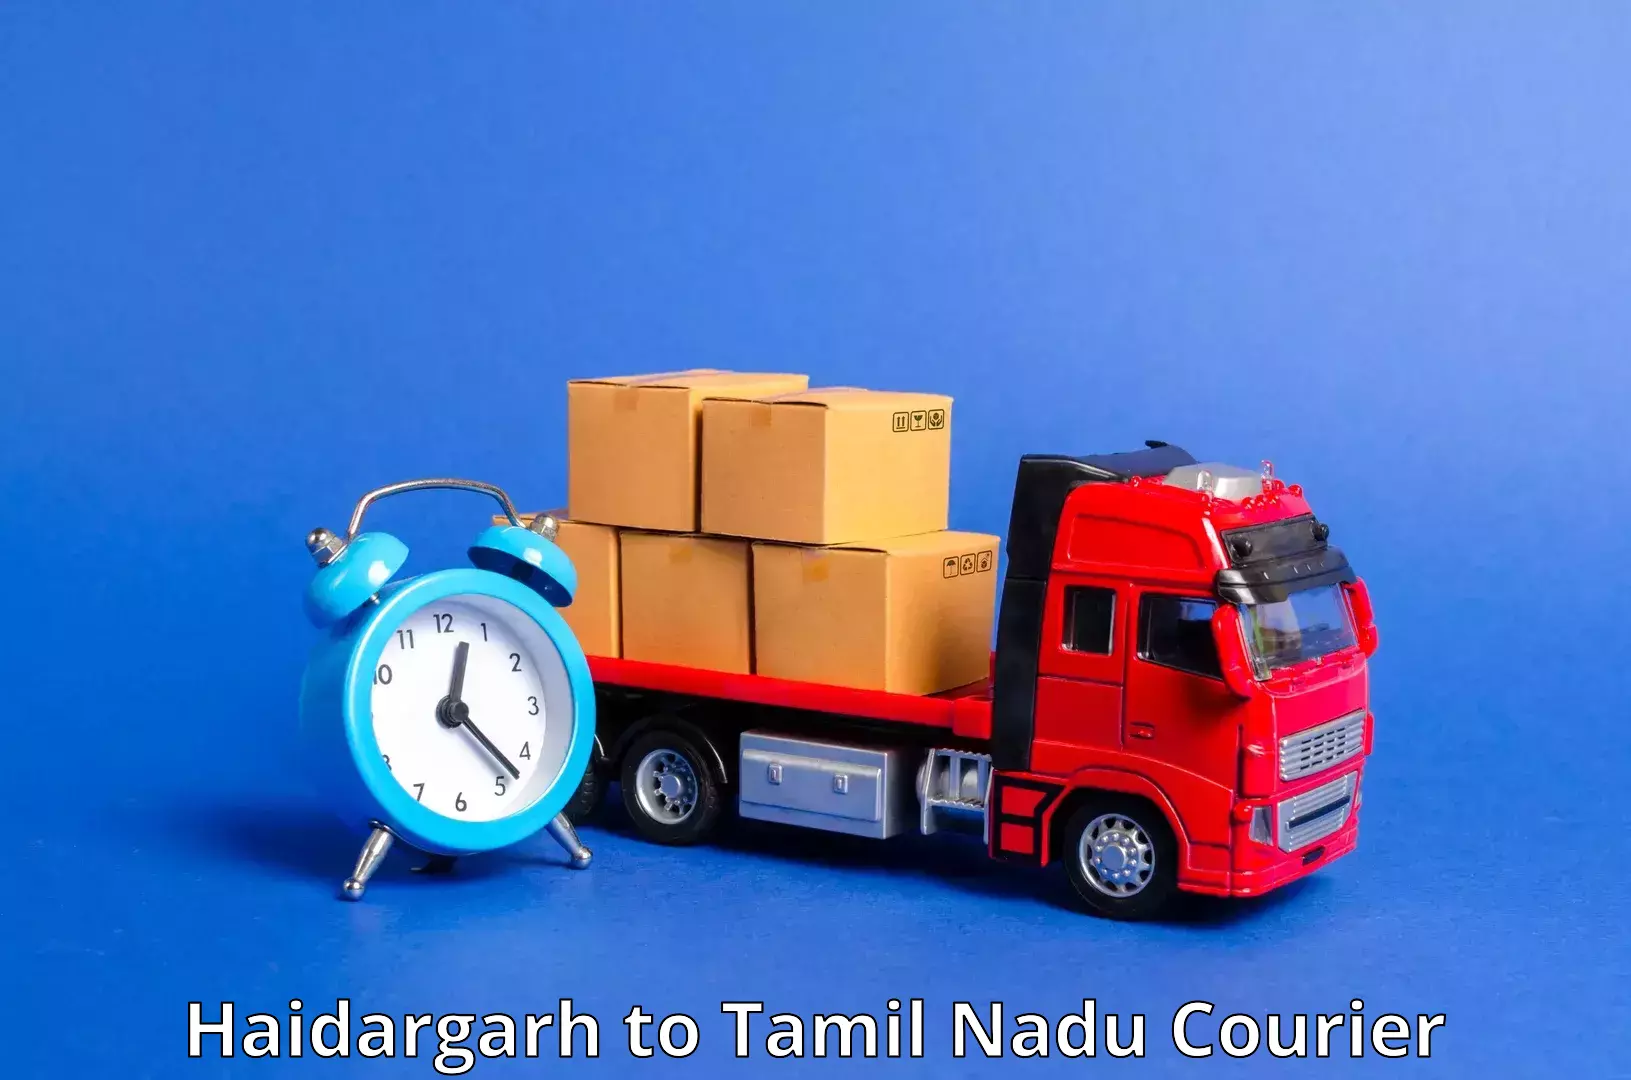 Professional courier handling Haidargarh to Tirupattur